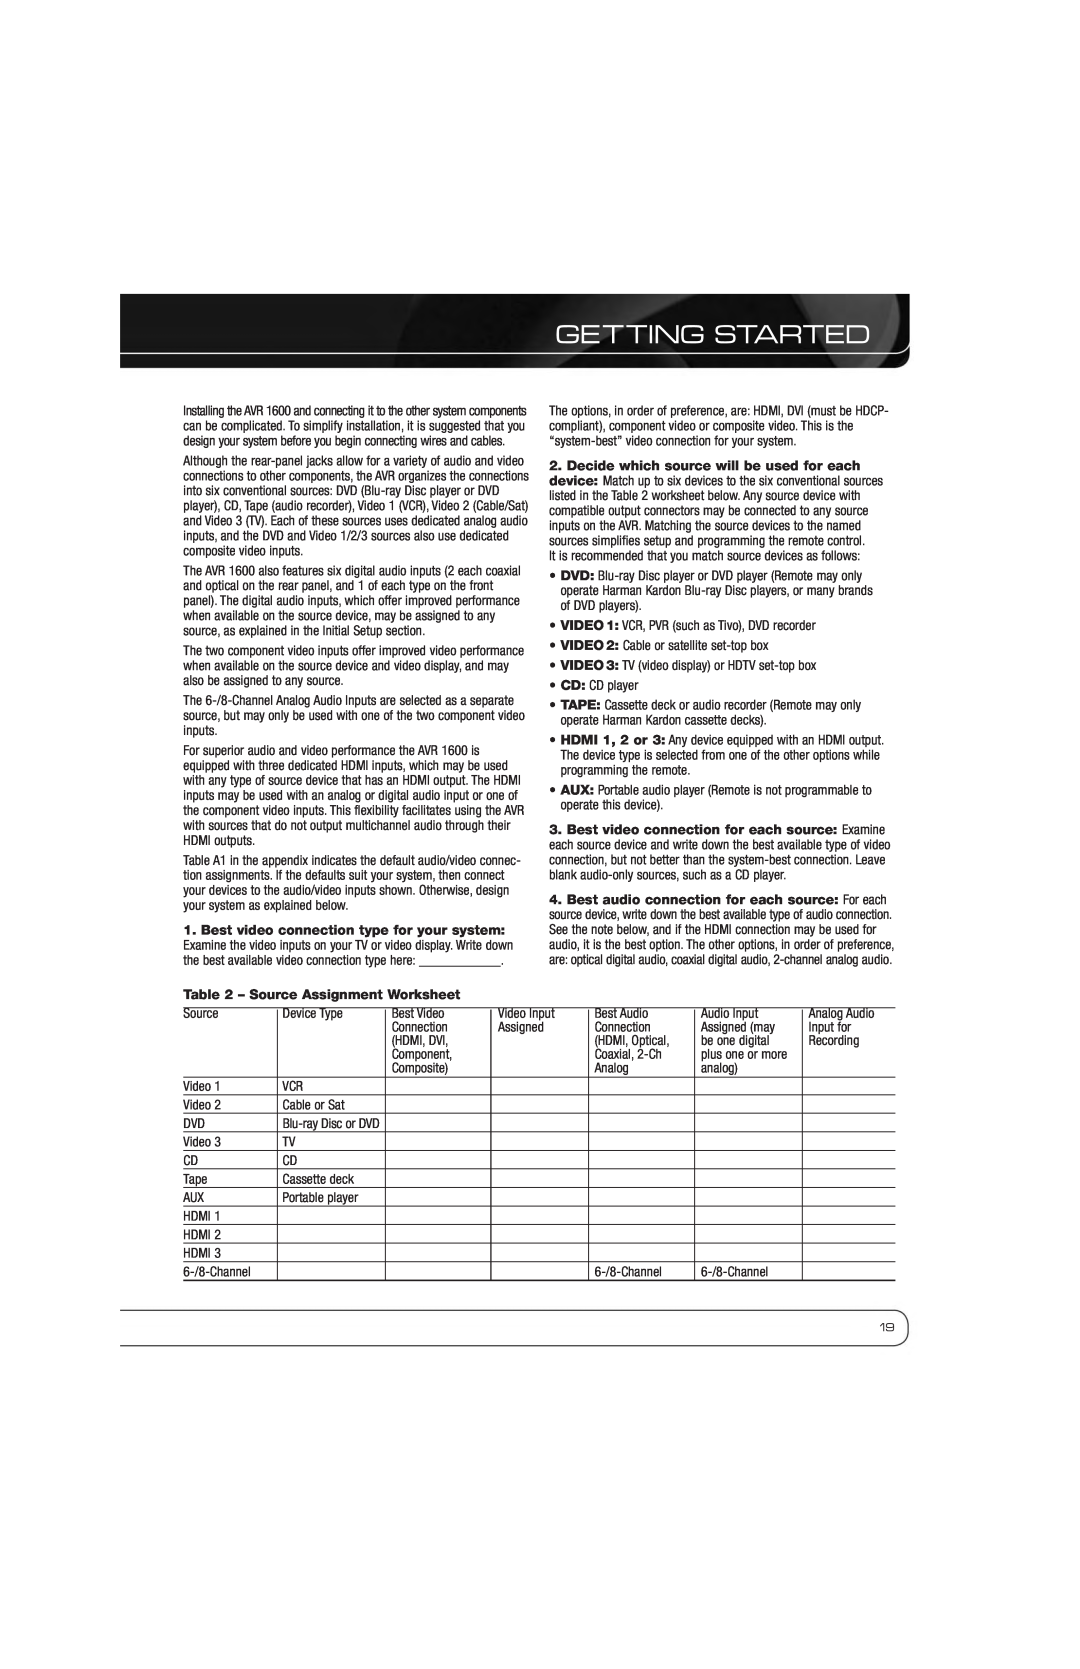 Harman-Kardon AVR 1600 owner manual Getting Started, Source Assignment Worksheet 